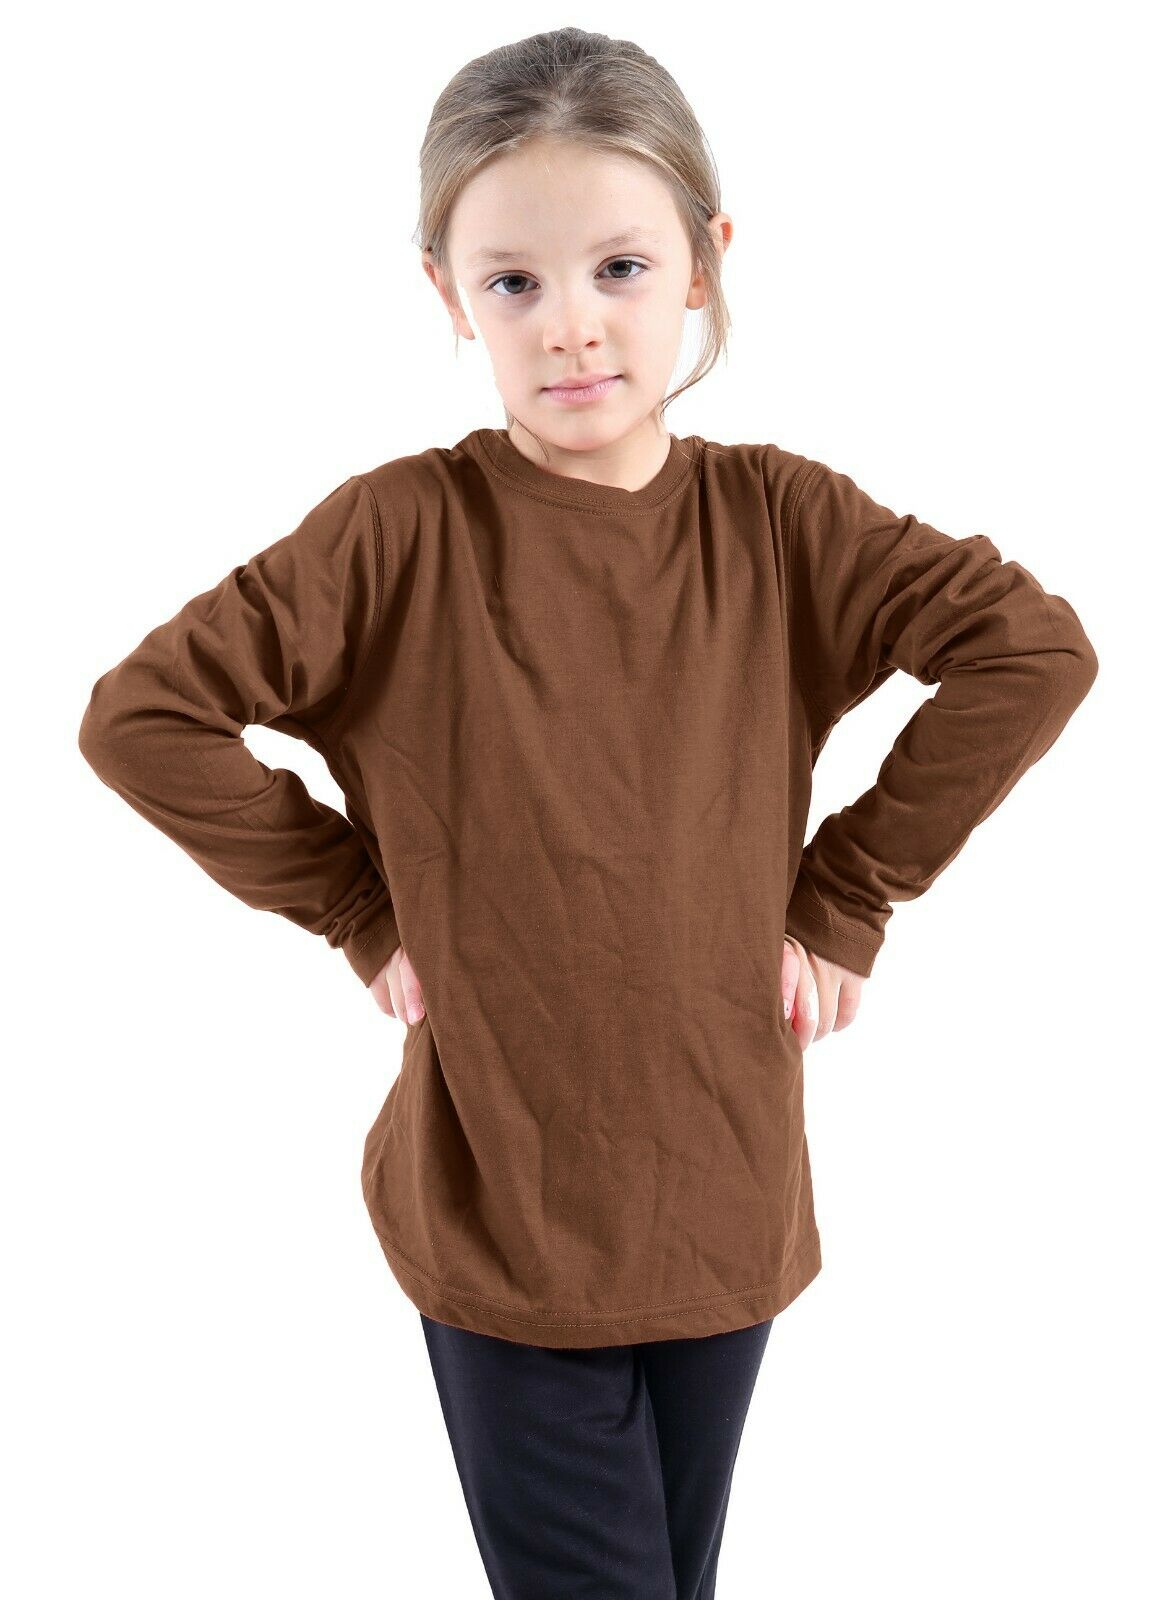 Girls Long Sleeve Plain Basic Kids T-Shirt Tops Crew Neck Uniform TEE 2-13 Years